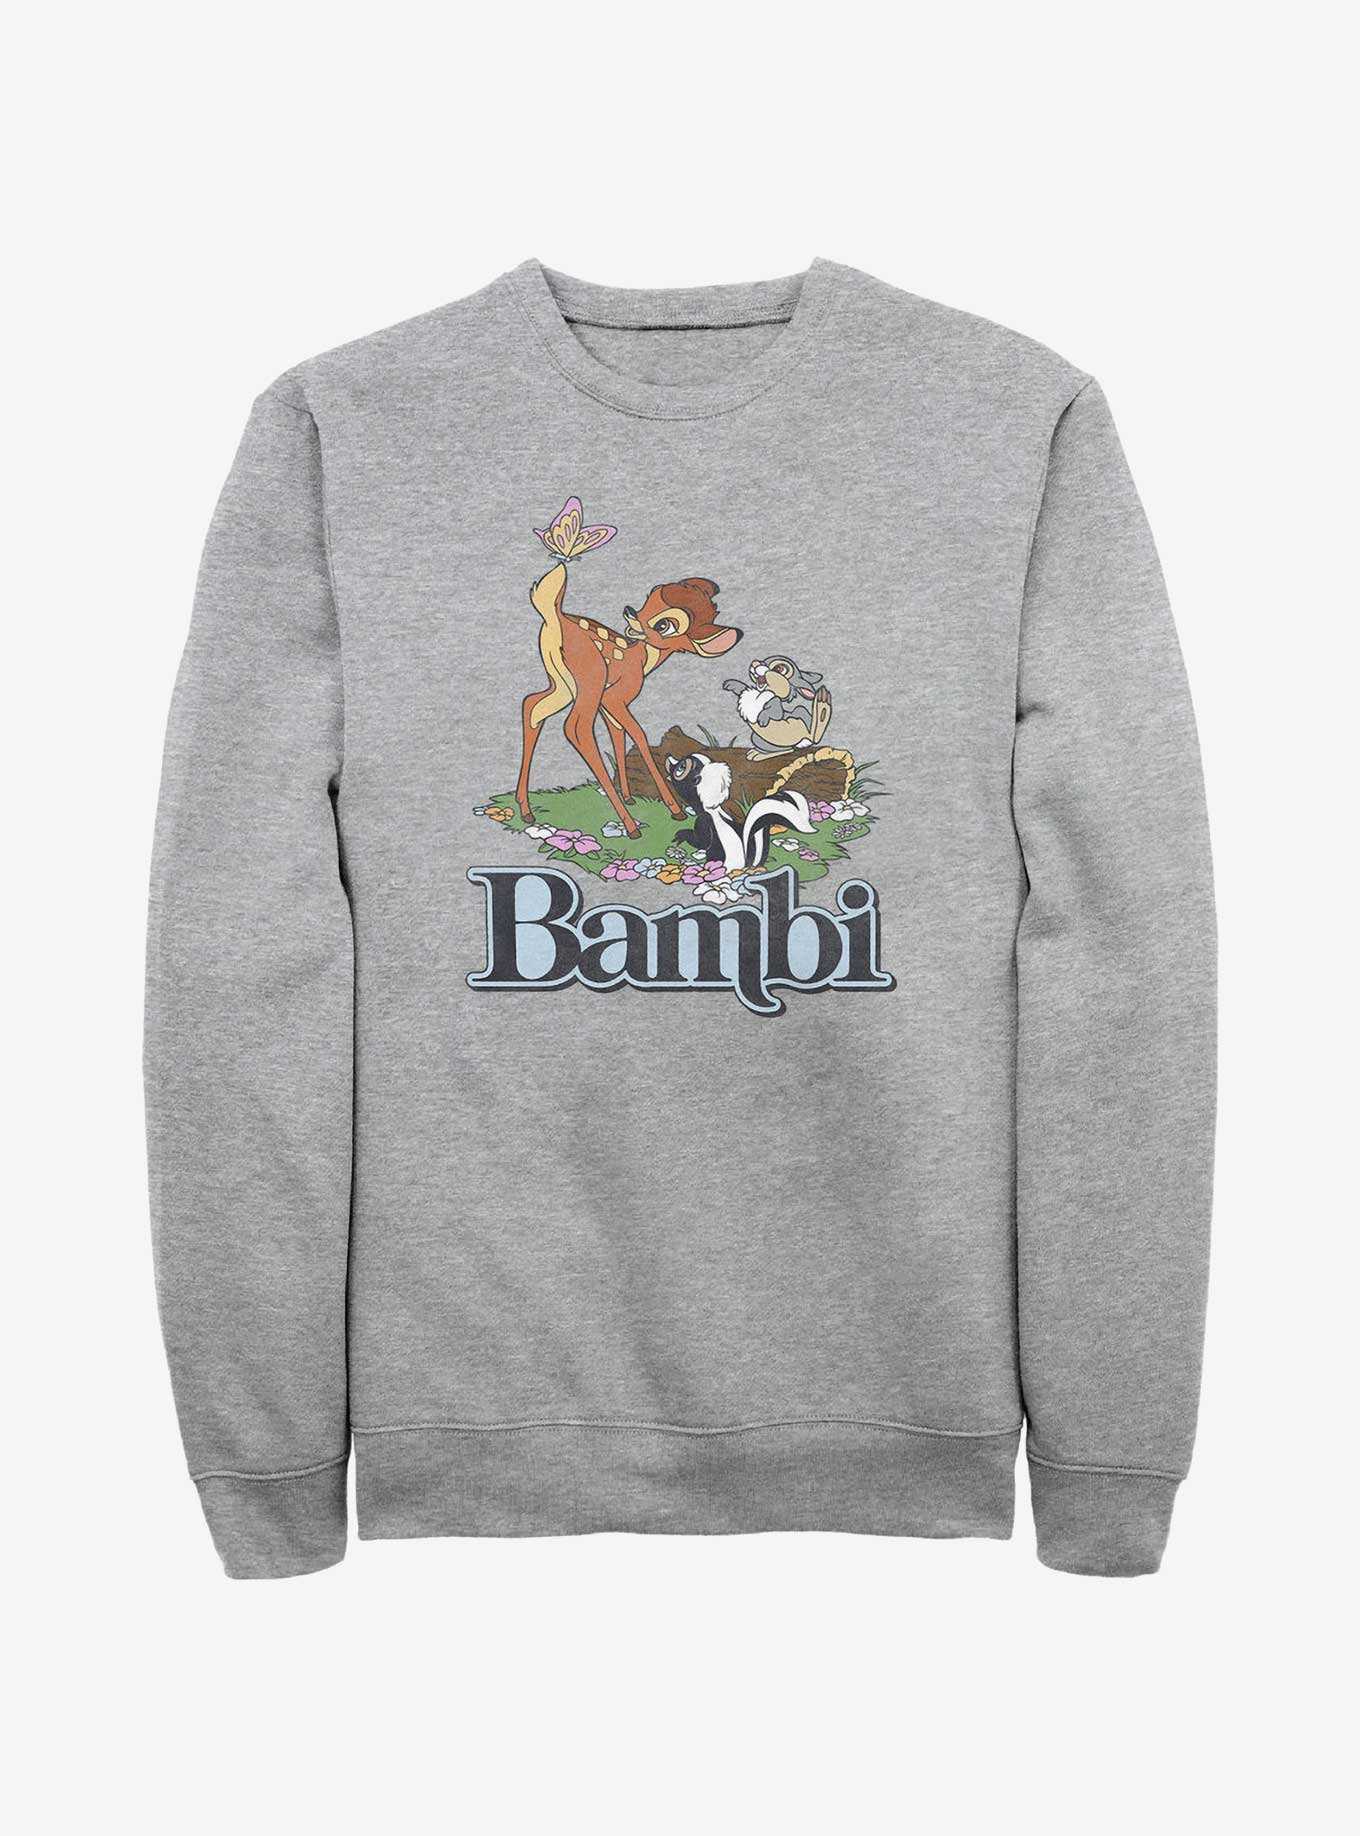 Shirts, BoxLunch | Bambi Merch & OFFICIAL Plushes